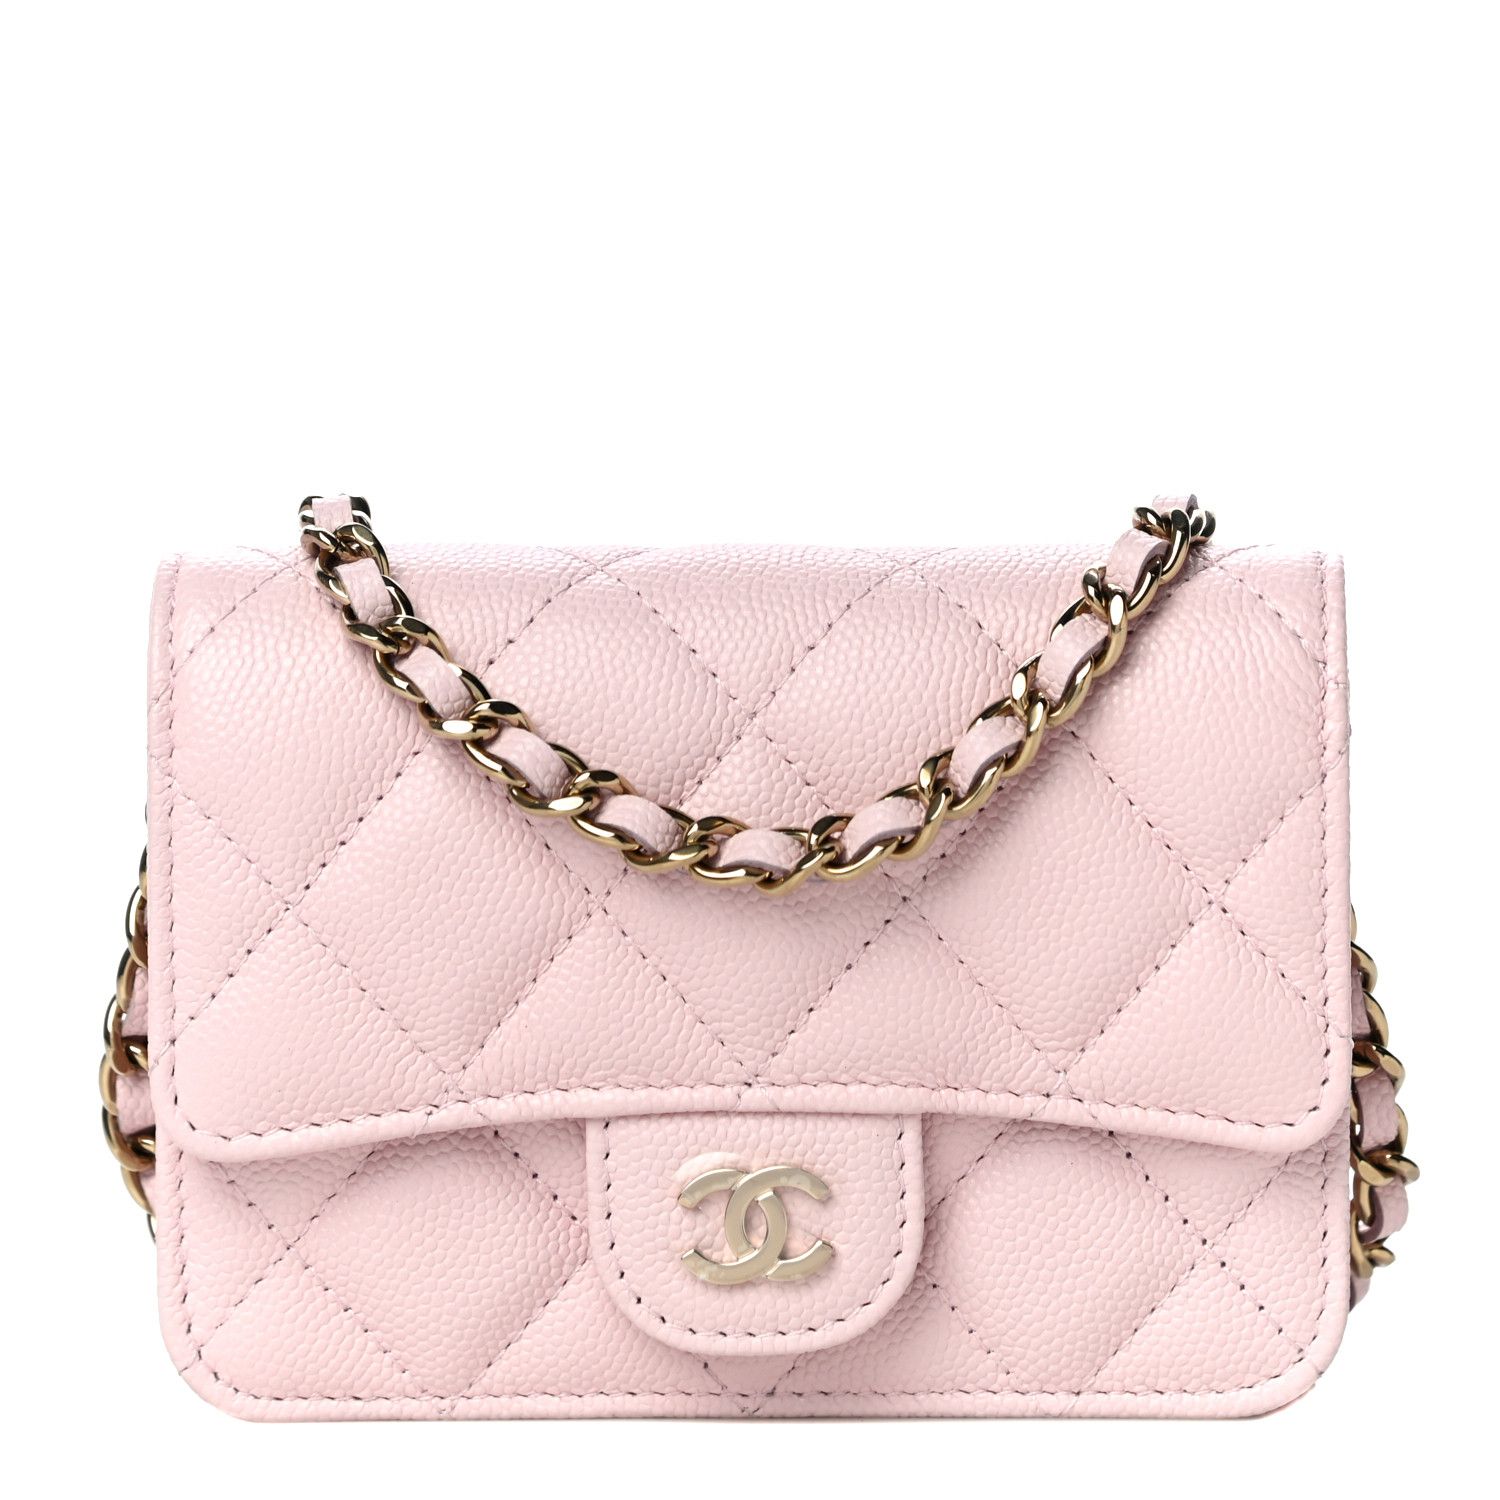 CHANEL Caviar Quilted Mini Chain Bag Pink | FASHIONPHILE | Fashionphile